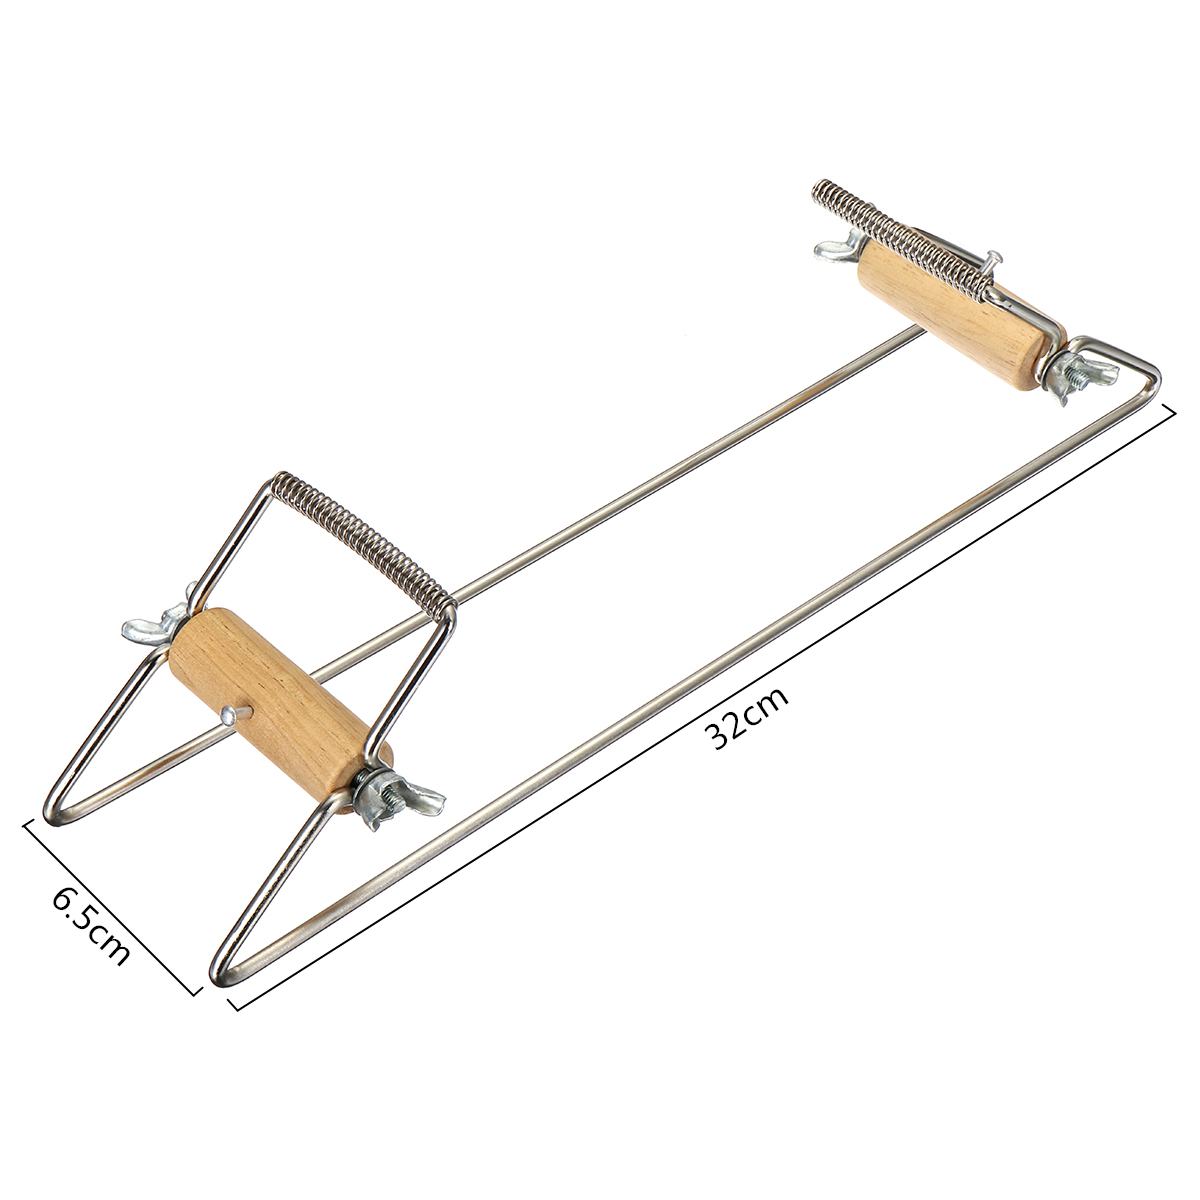 Bead Loom Art Craft Belt Headband Key Chain Weaving Making Machine Beading Tool Metal+Wood Portable Lightweight 32x6.5cm